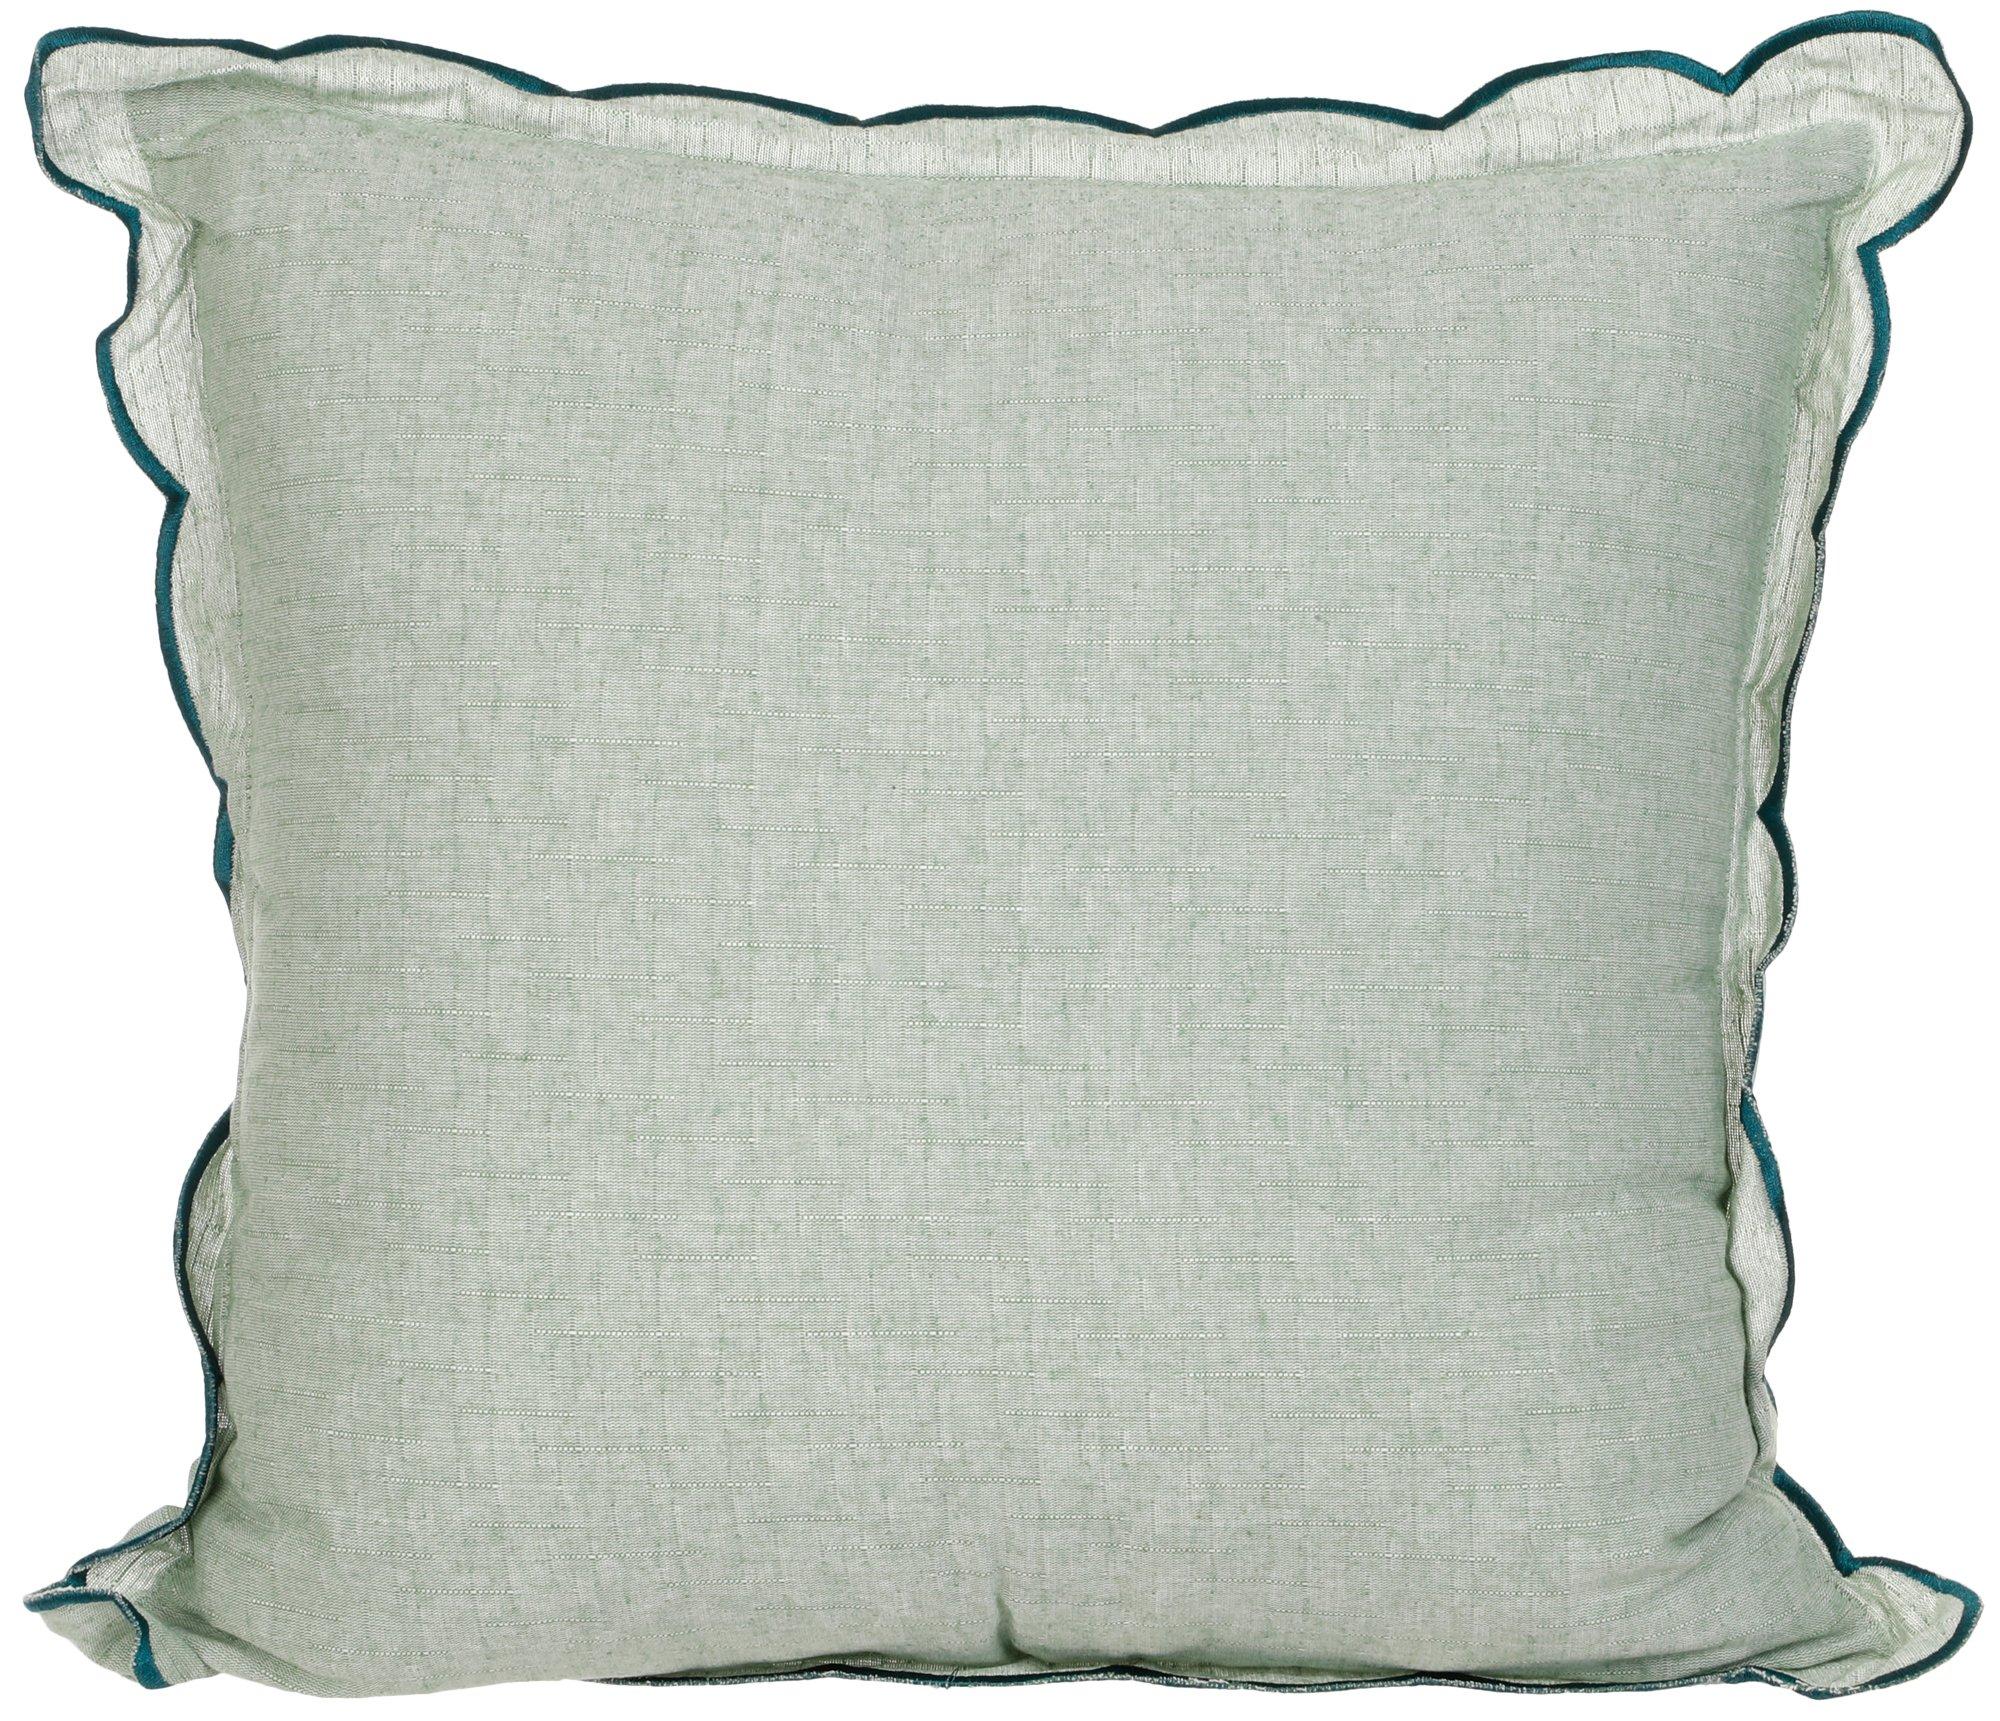 20x20 Decorative Pillow